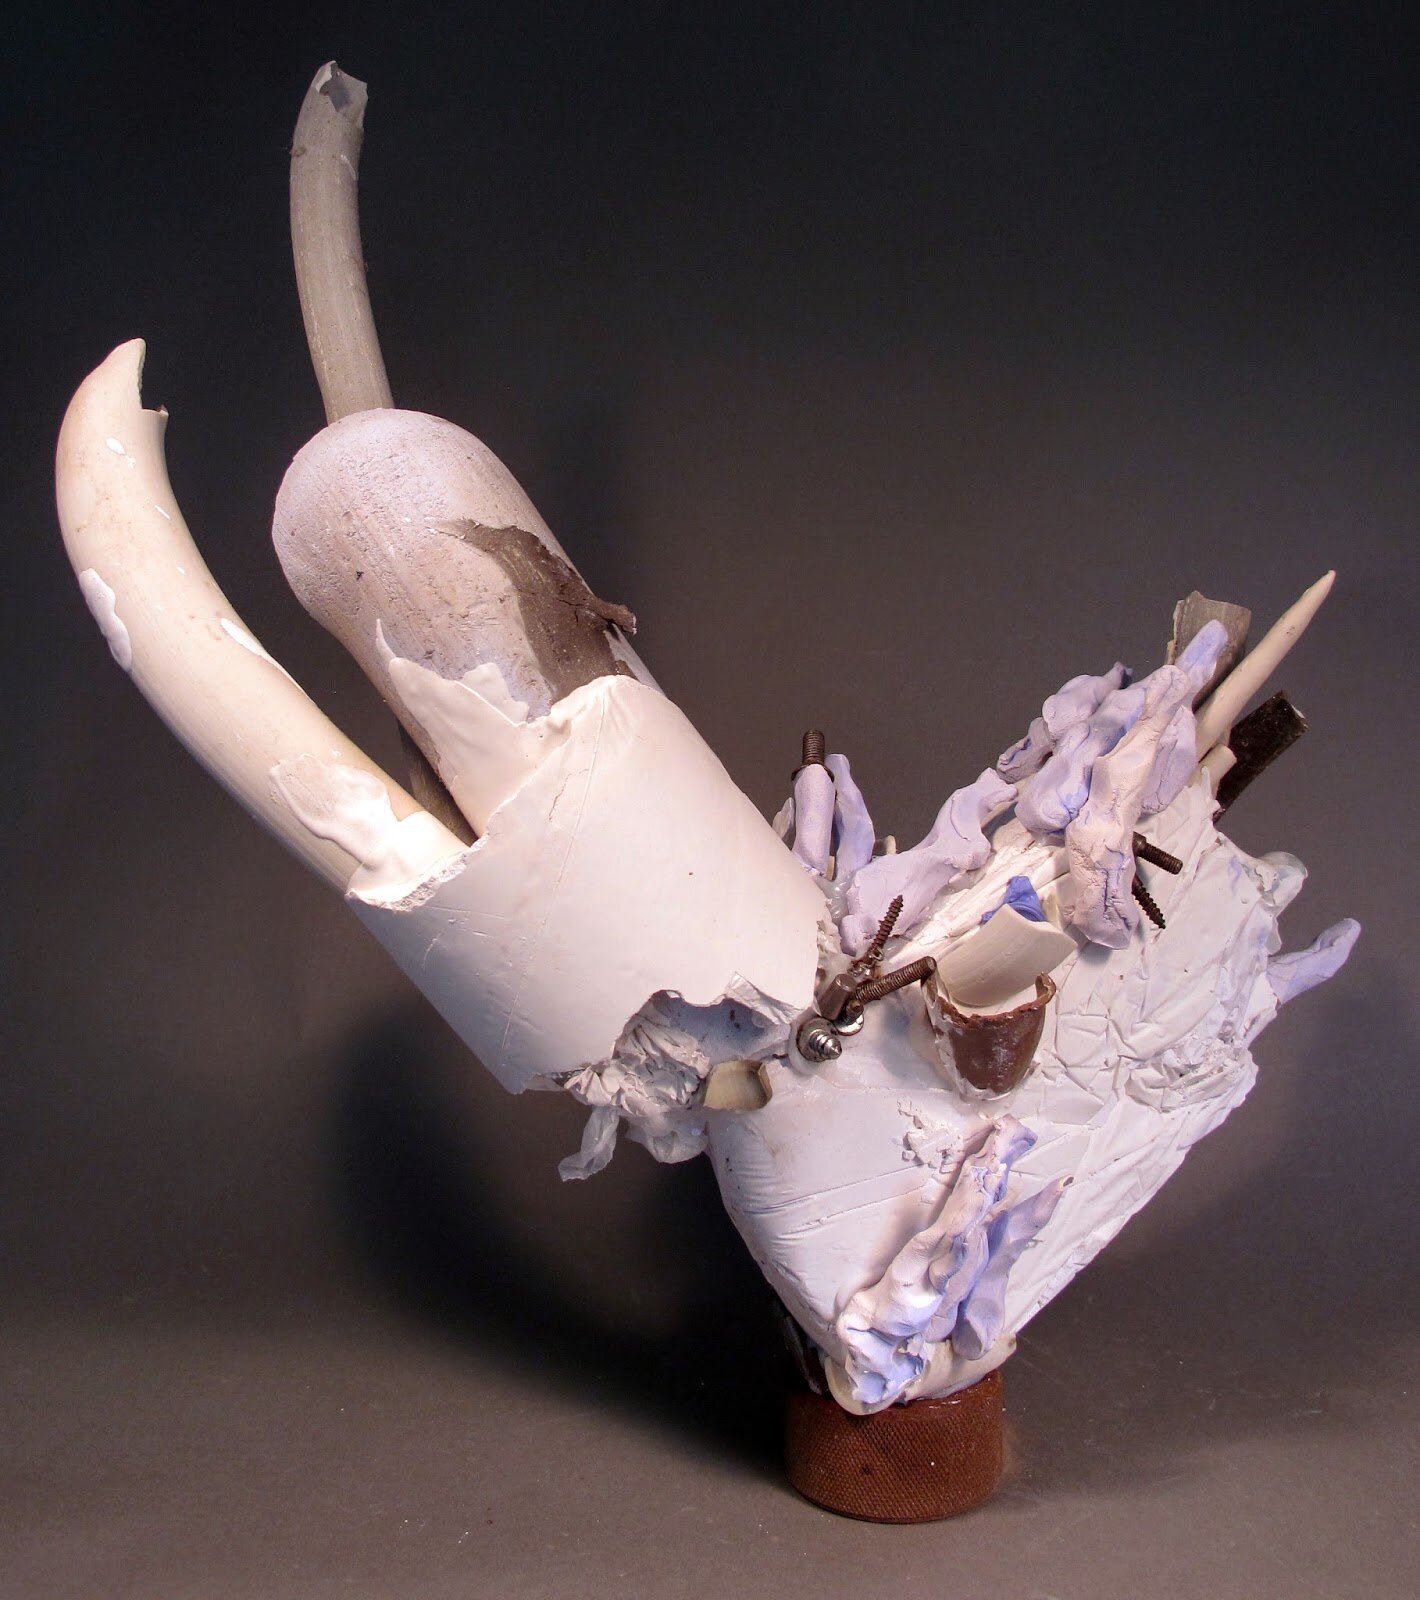  Sara Fine-Wilson,  Milk Bone Balance (DETAIL),  Clay, Plaster, Metal, Found Objects, Silicone, 21x21x7 